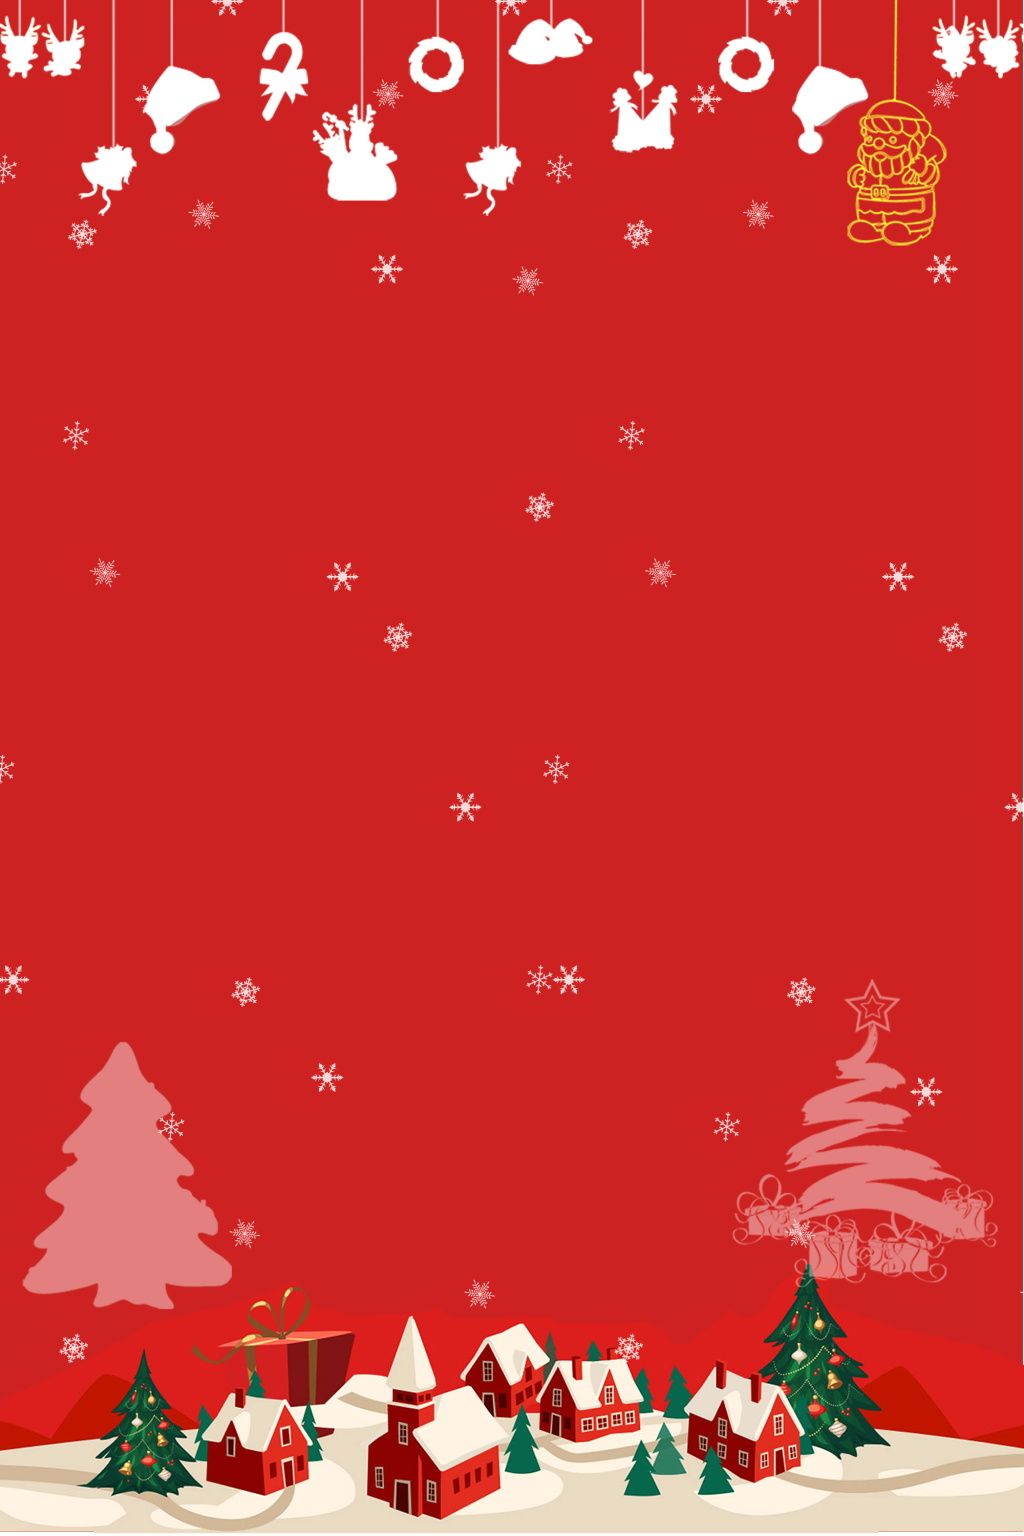 Christmas Background psd. Christmas wallpaper, Cute christmas wallpaper, Christmas background